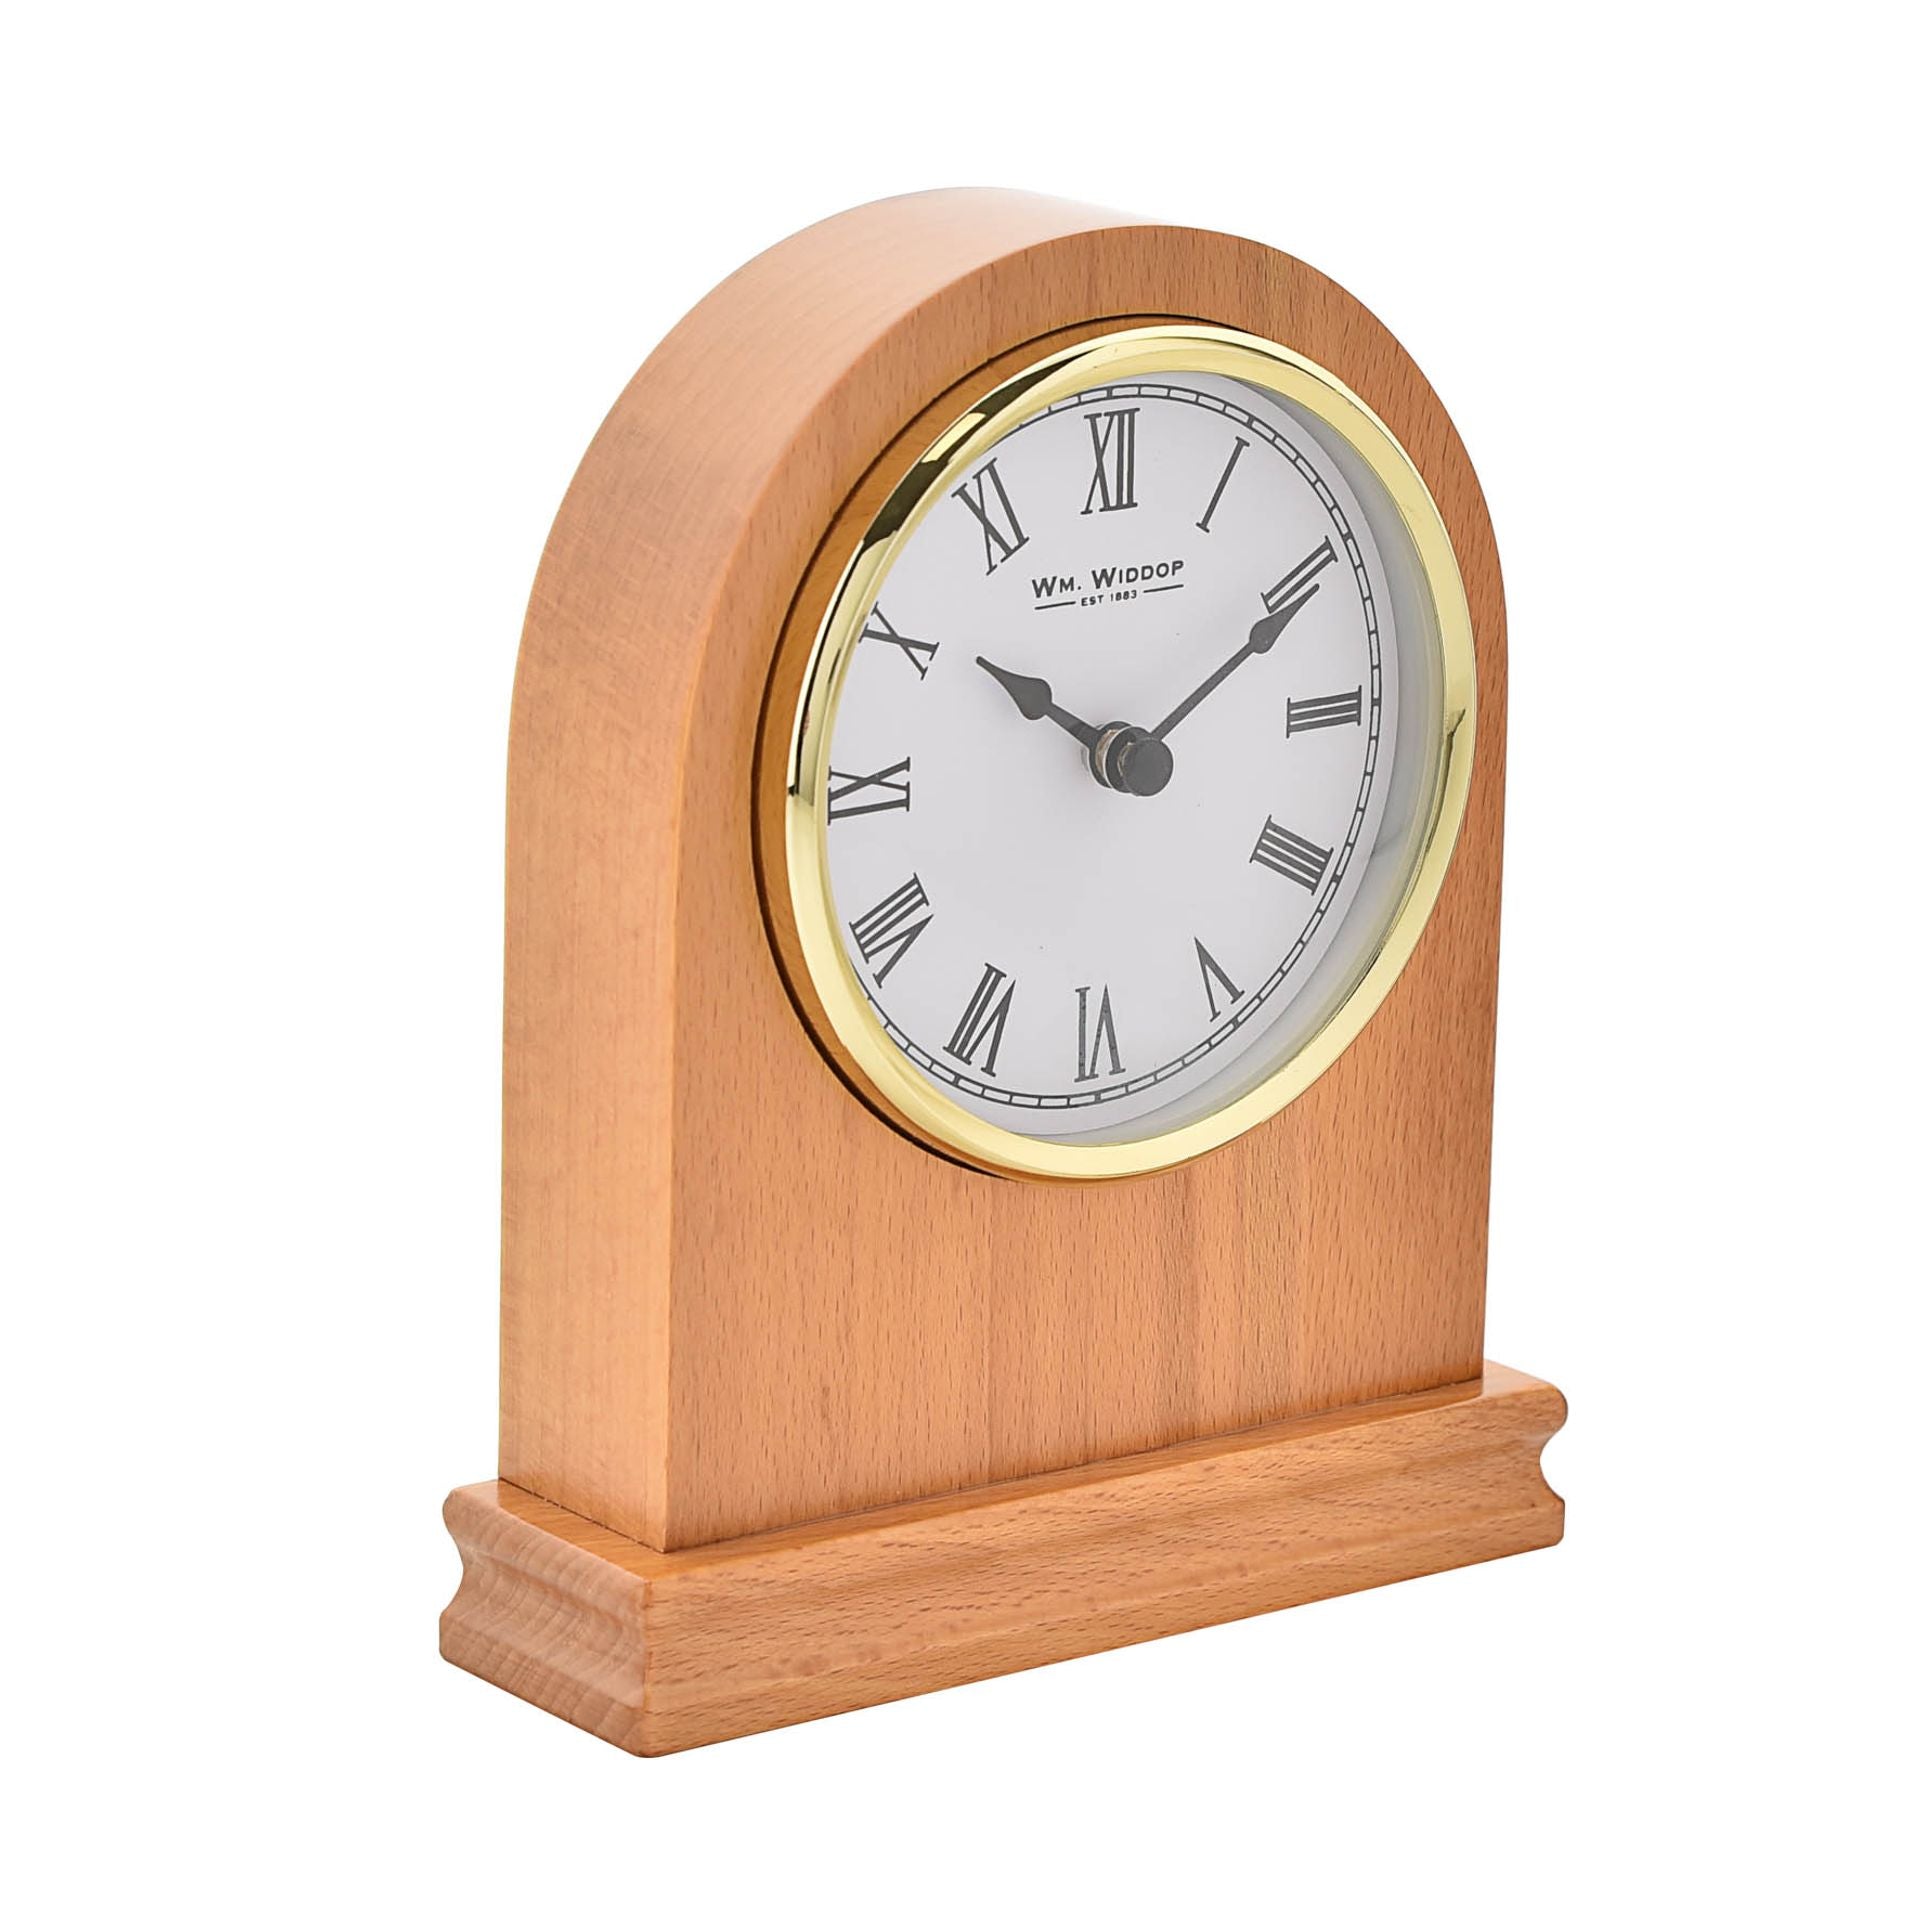 WM. Widdop Arched Light Wood Mantel Clock